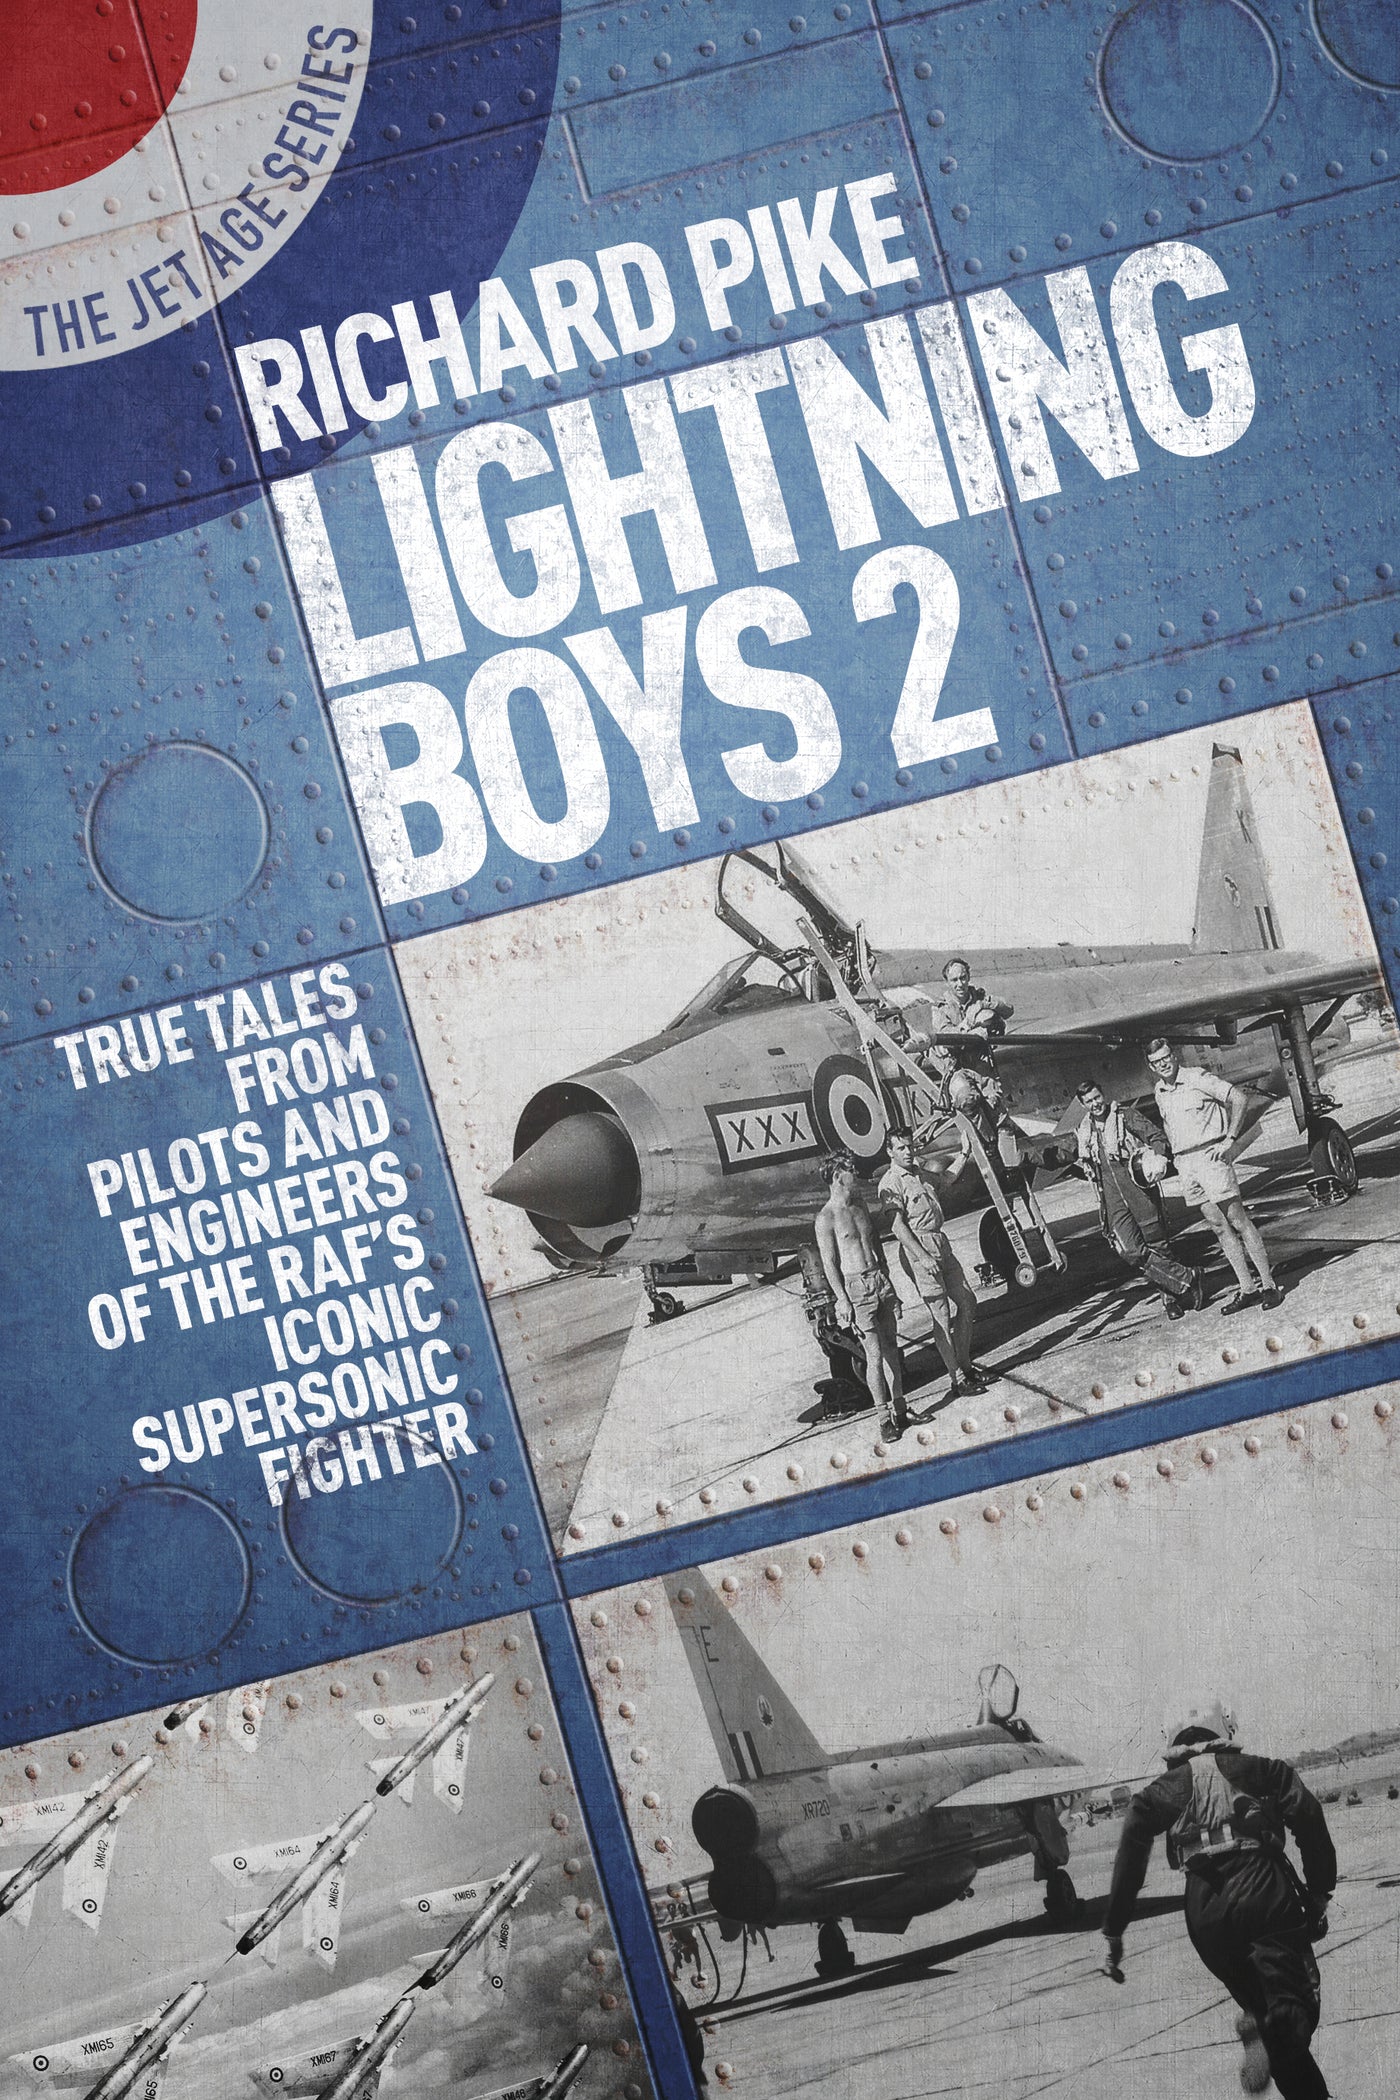 The Lightning Boys 2